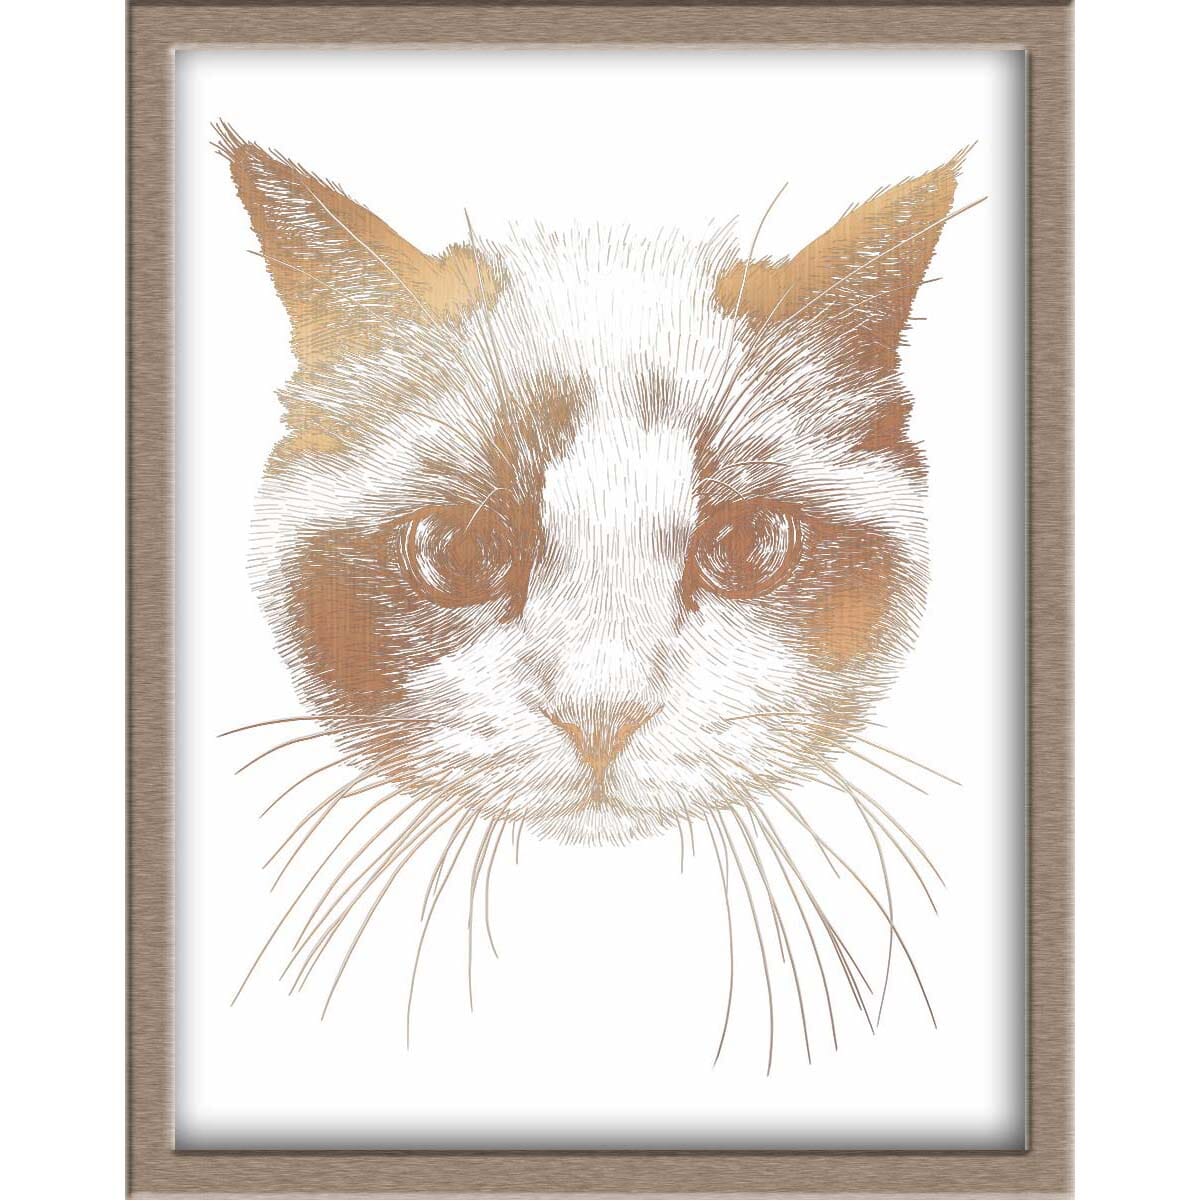 Ragdoll Cat Foiled Print Posters, Prints, & Visual Artwork JoyousJoyfulJoyness 